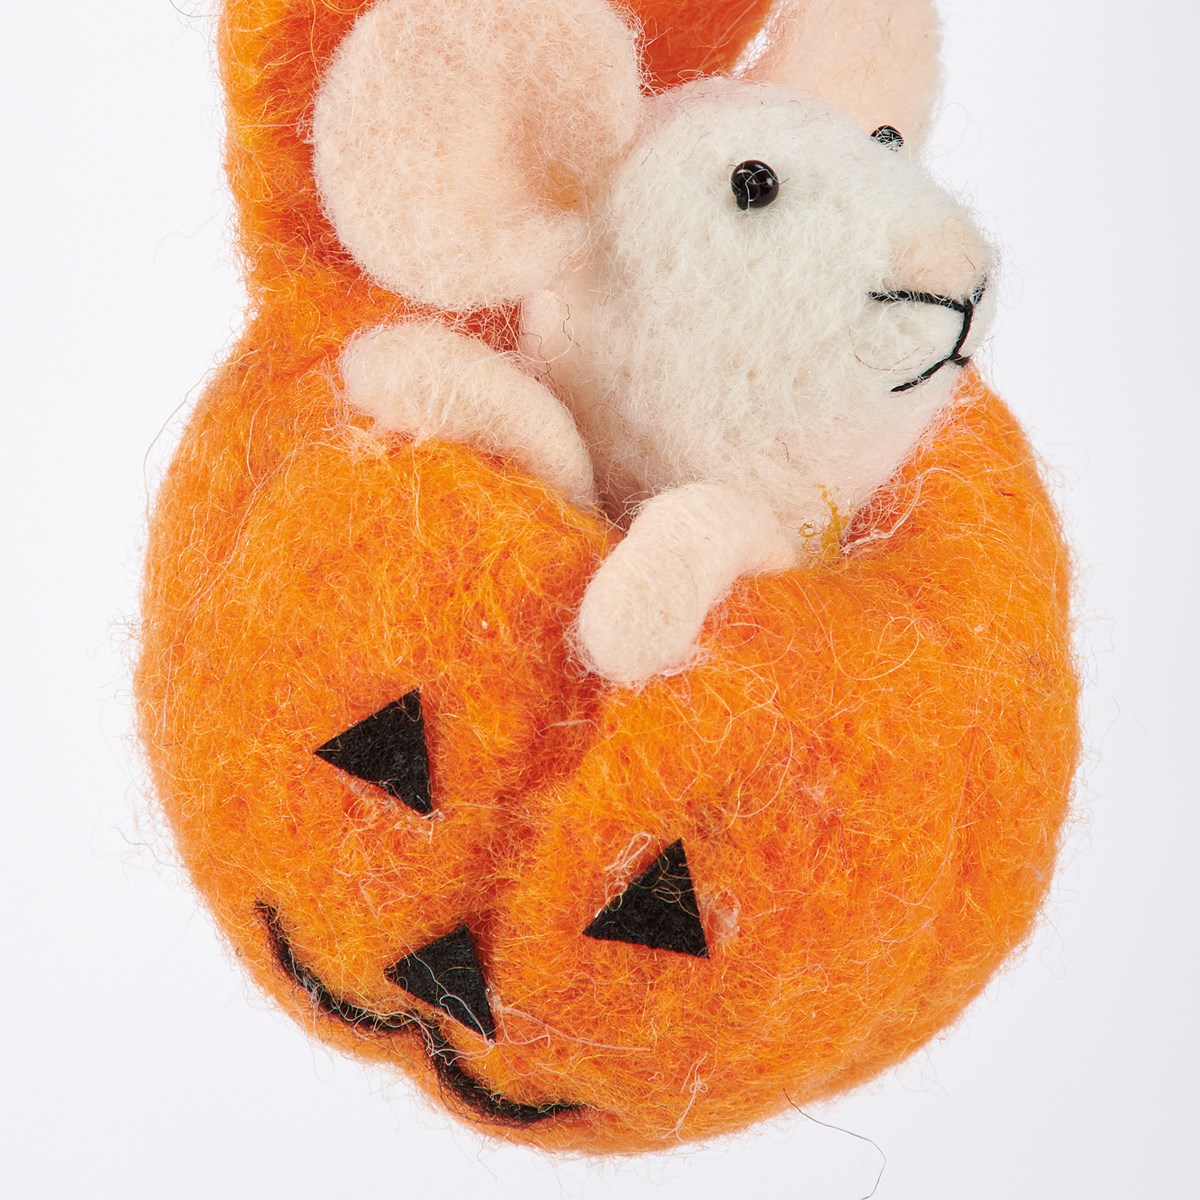 Pumpkin Mouse Critter - Felt, Polyester, Plastic